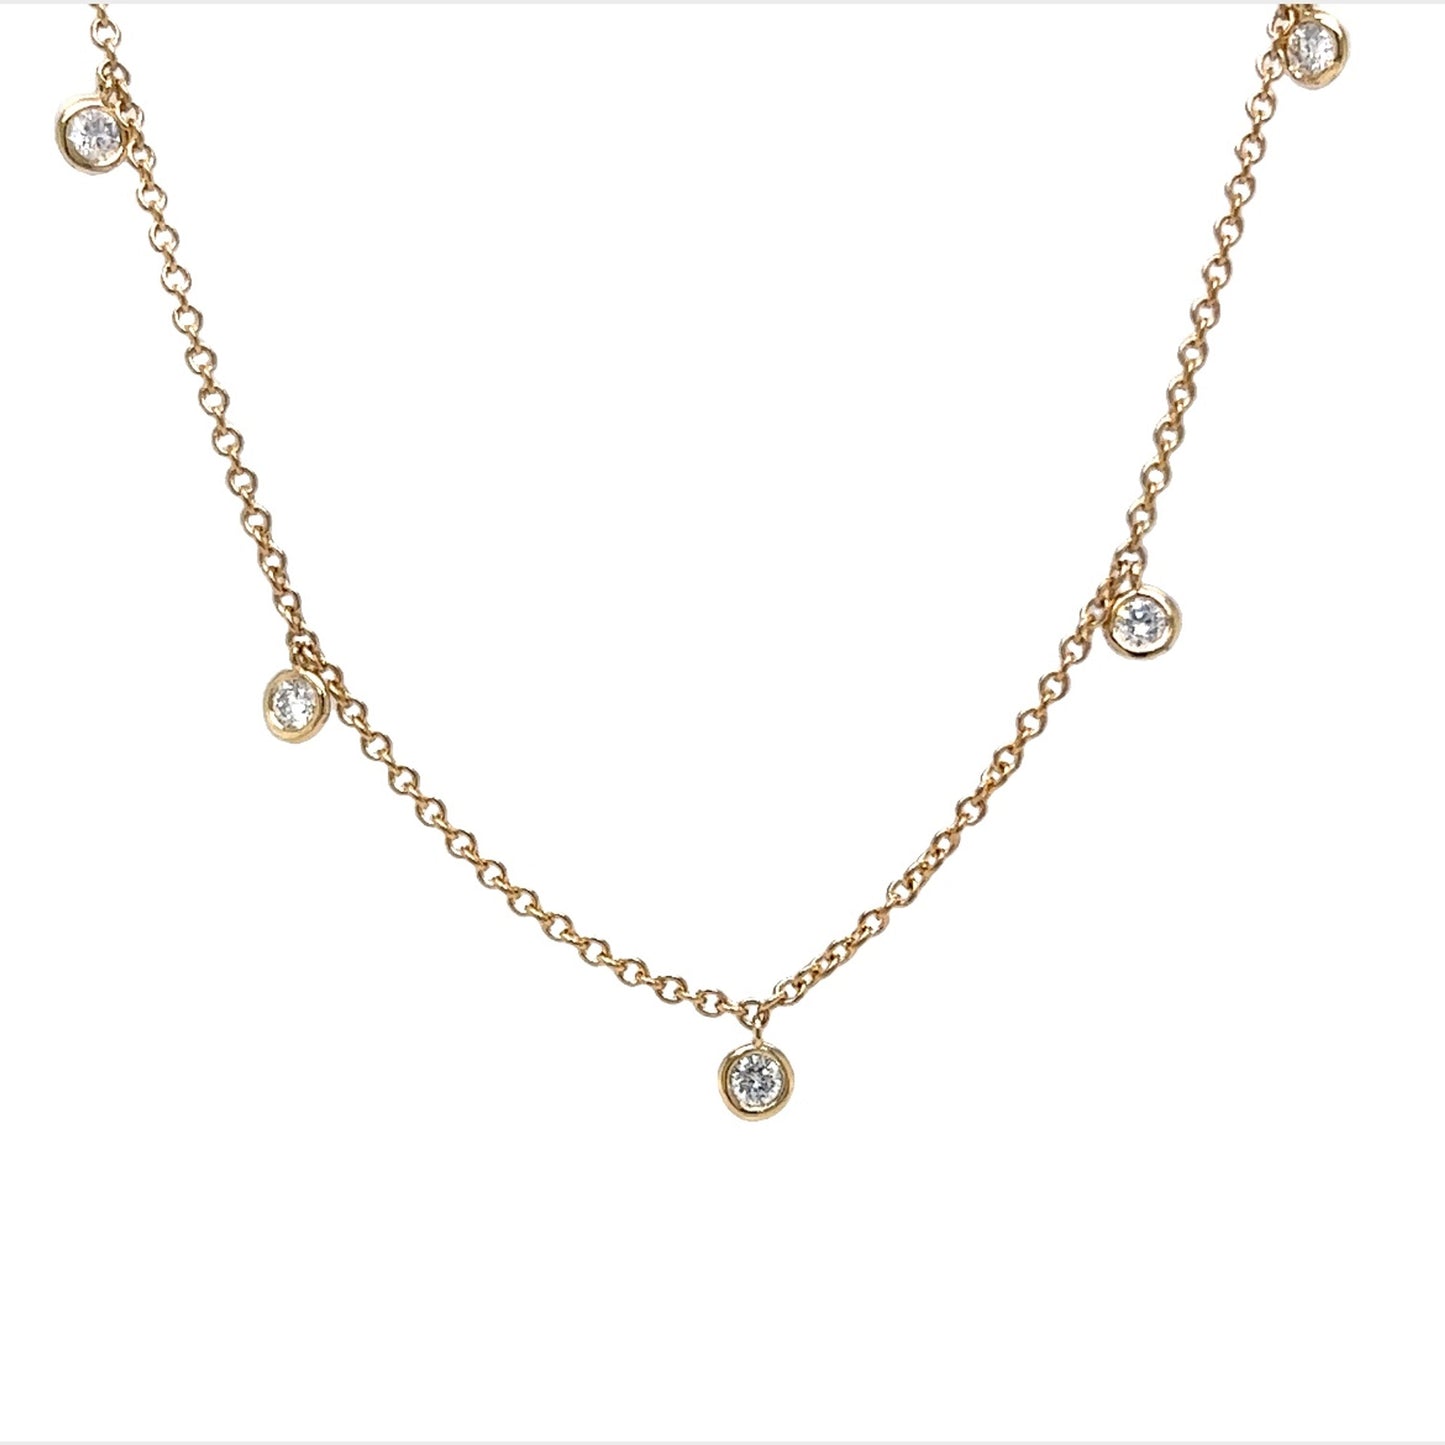 Dangle Bezel Set Diamond Necklace in 14k Yellow Gold